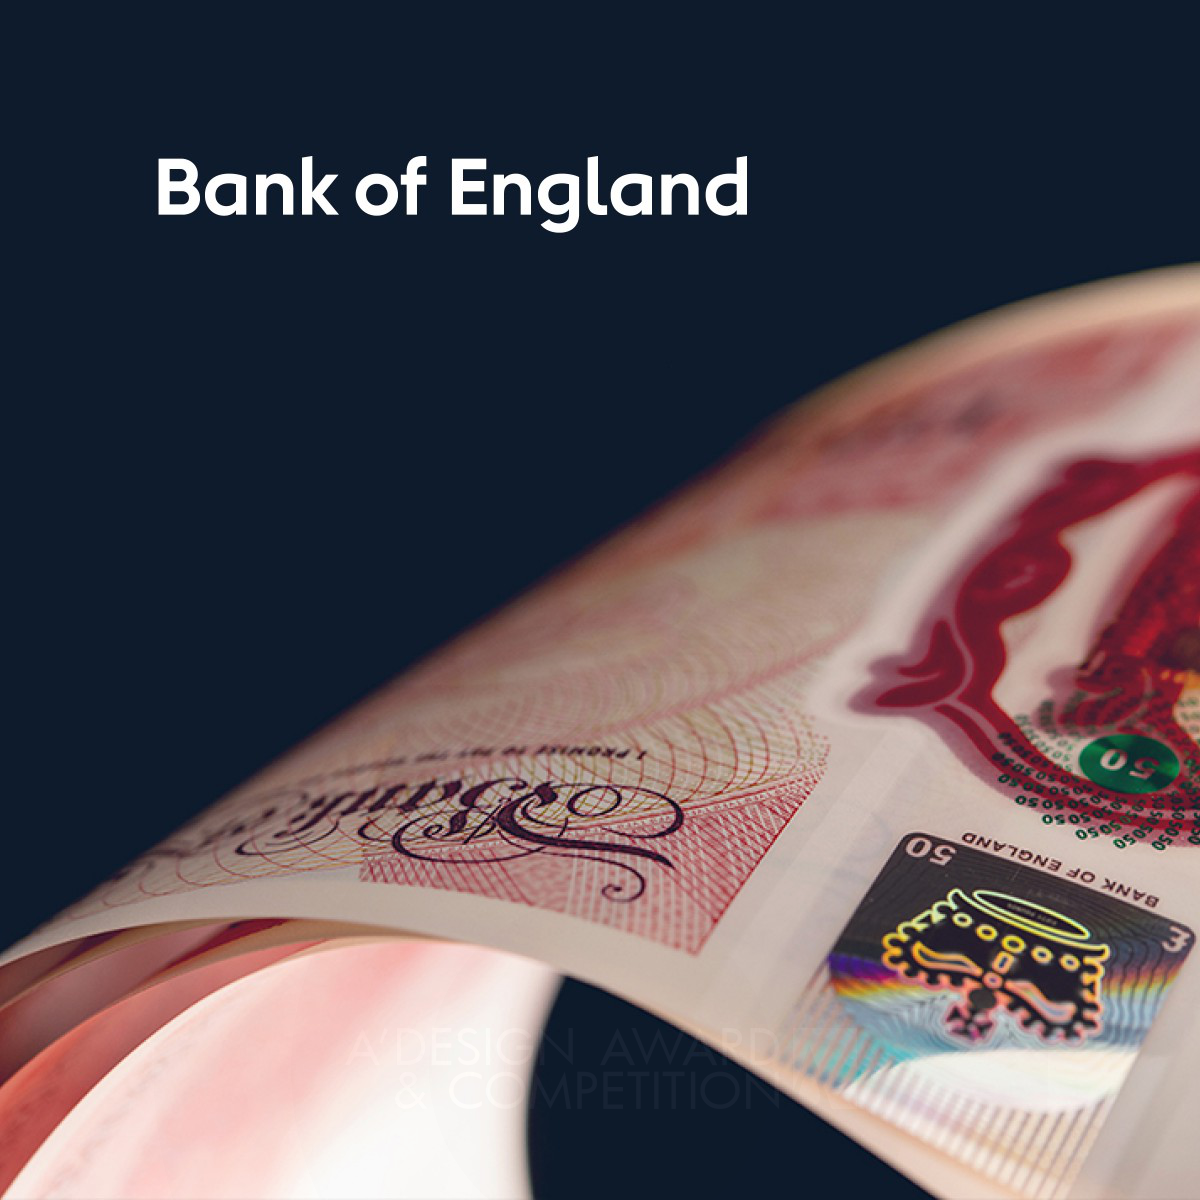 Bank of England Visual Identity by Matteo Ruisi